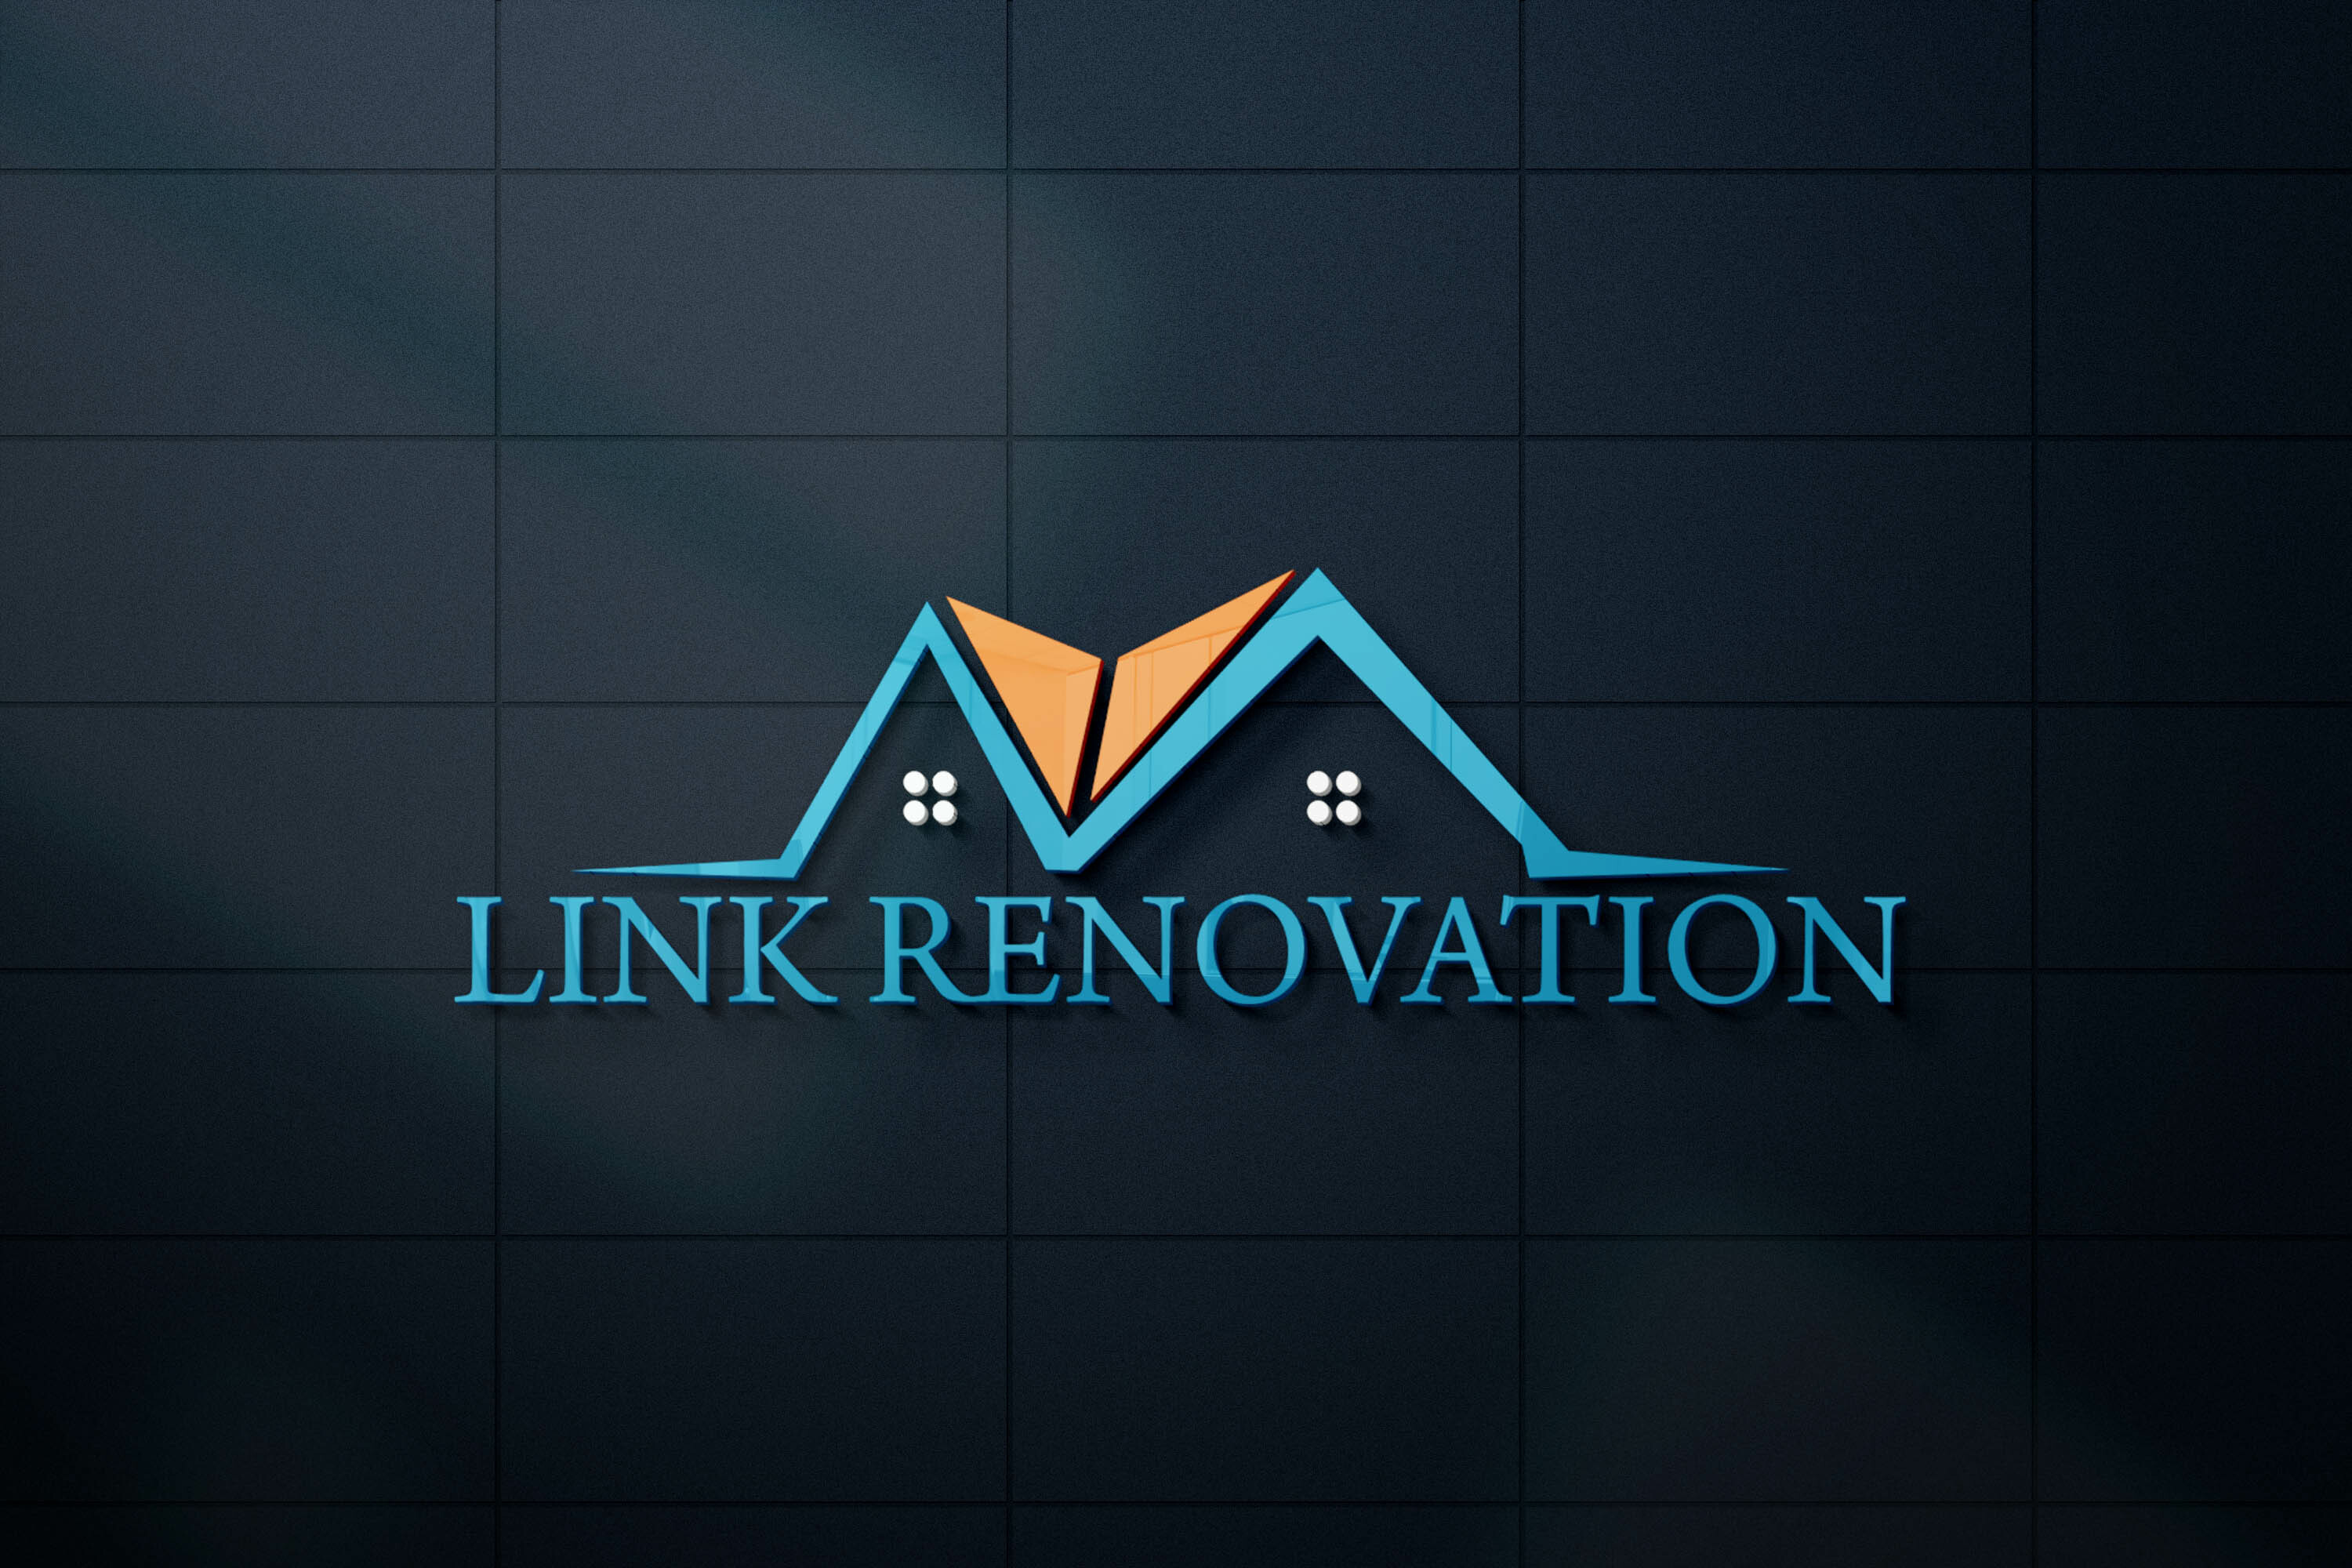 LINK RENOVATION's logo